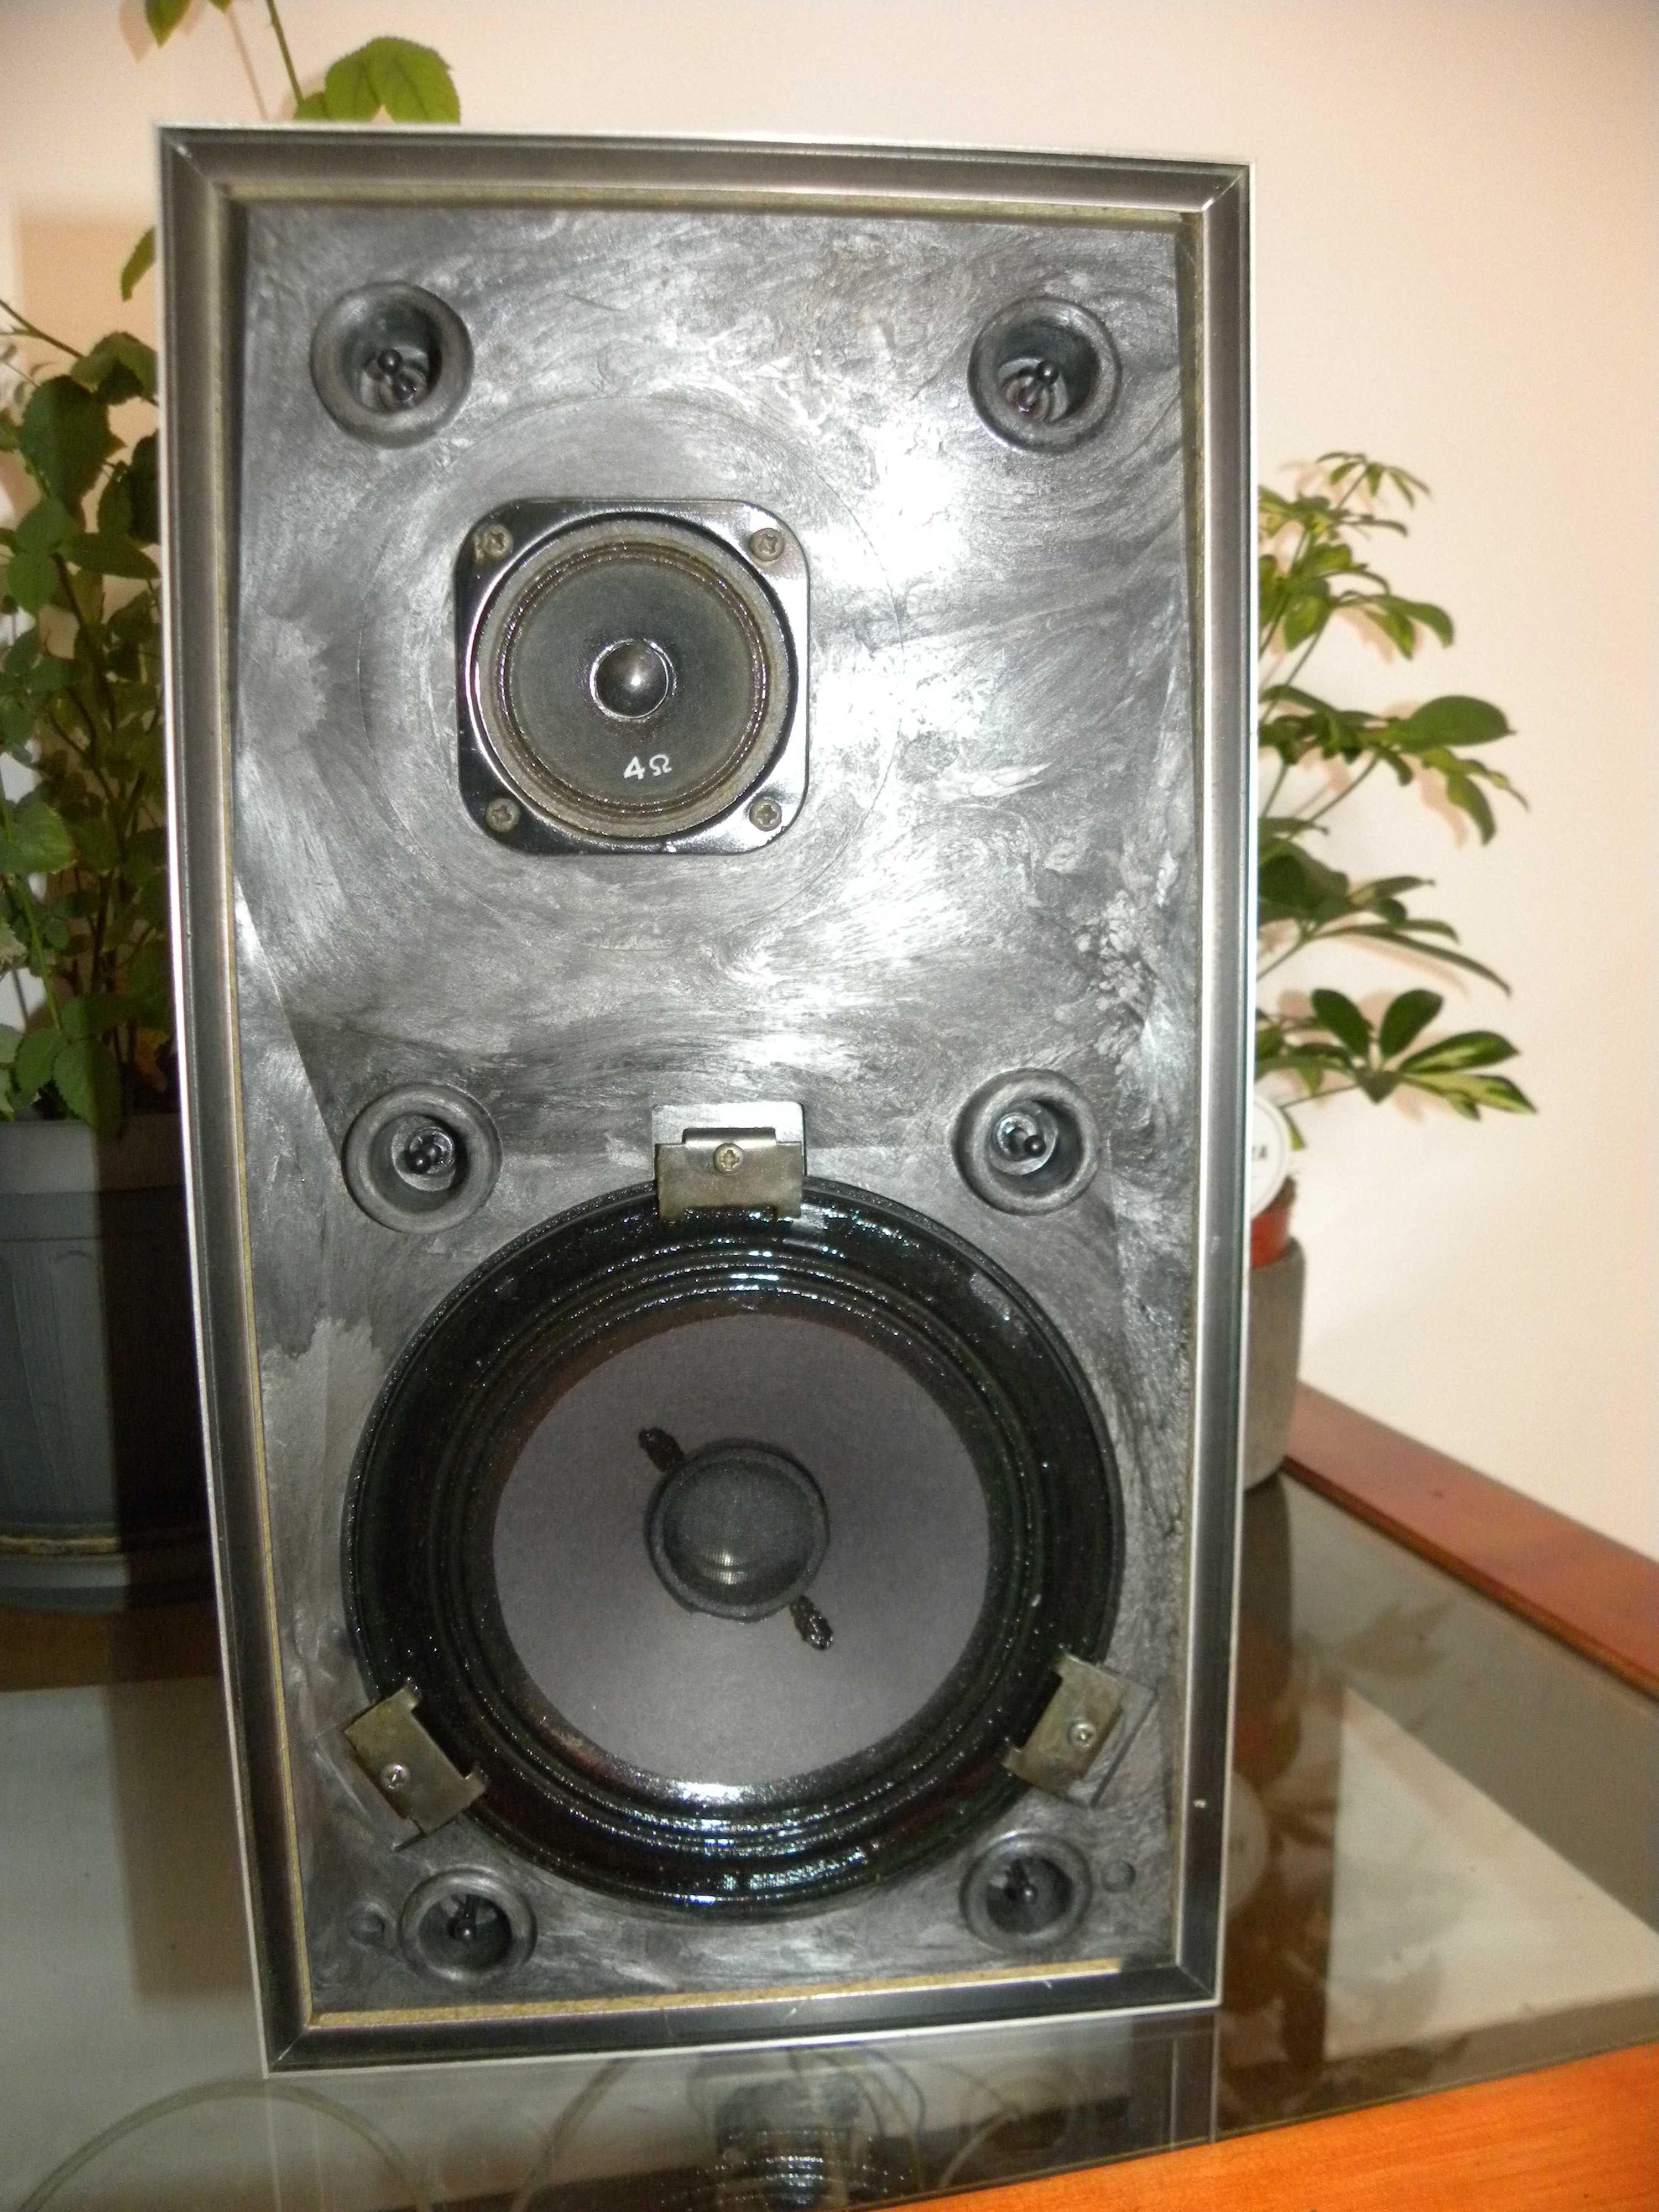 Vintage B&O Beovox S25 Passive Loudspeakers (1977 - 1983)